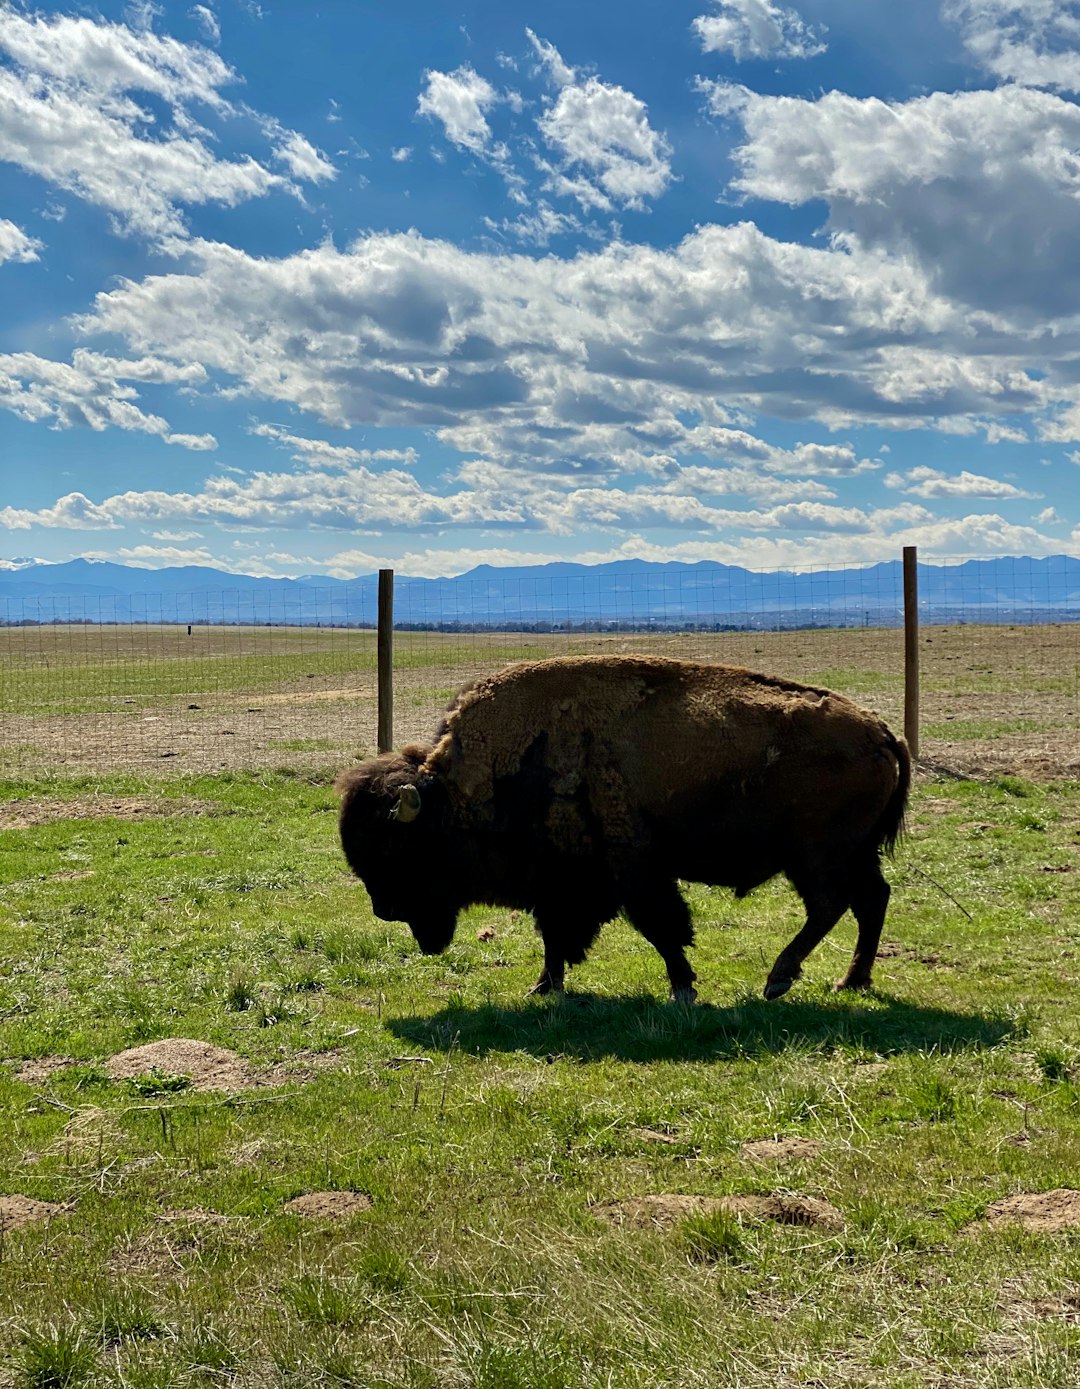 brown bison on green grass field under blue sky during daytime